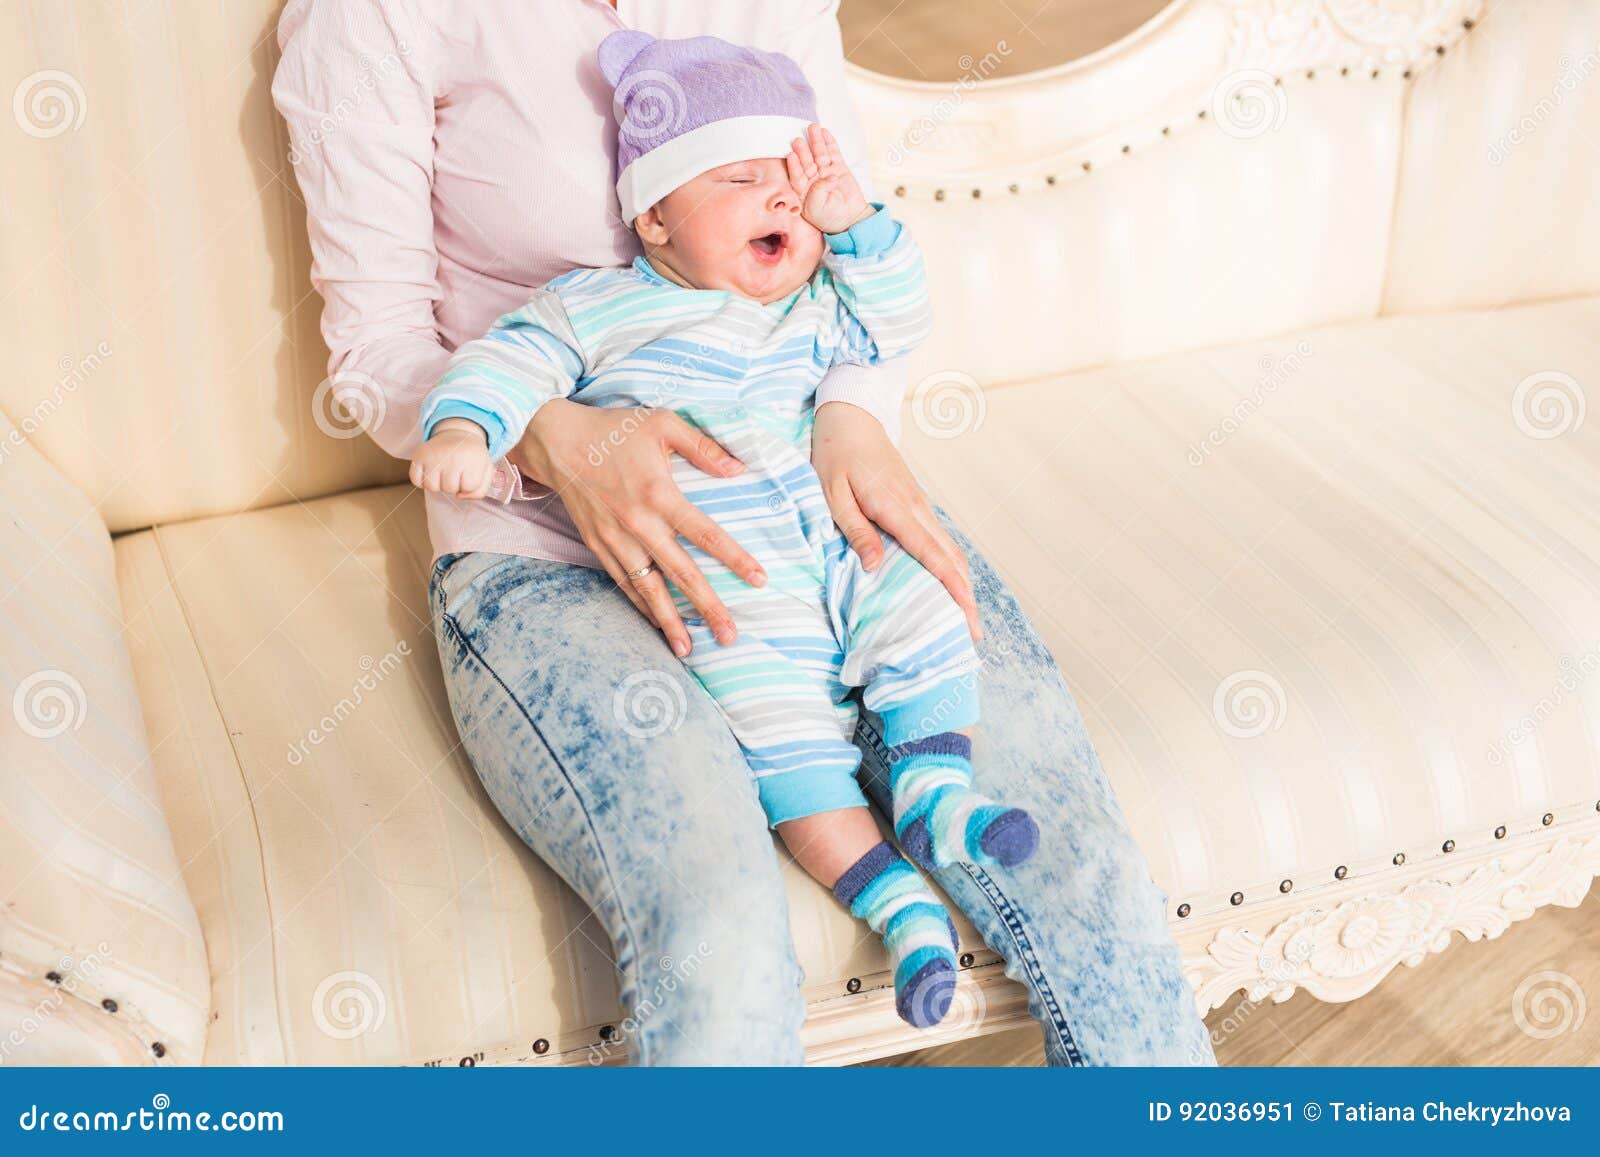 Tired Newborn Baby Boy Rubbing Eyes Stock Image - Image of ...